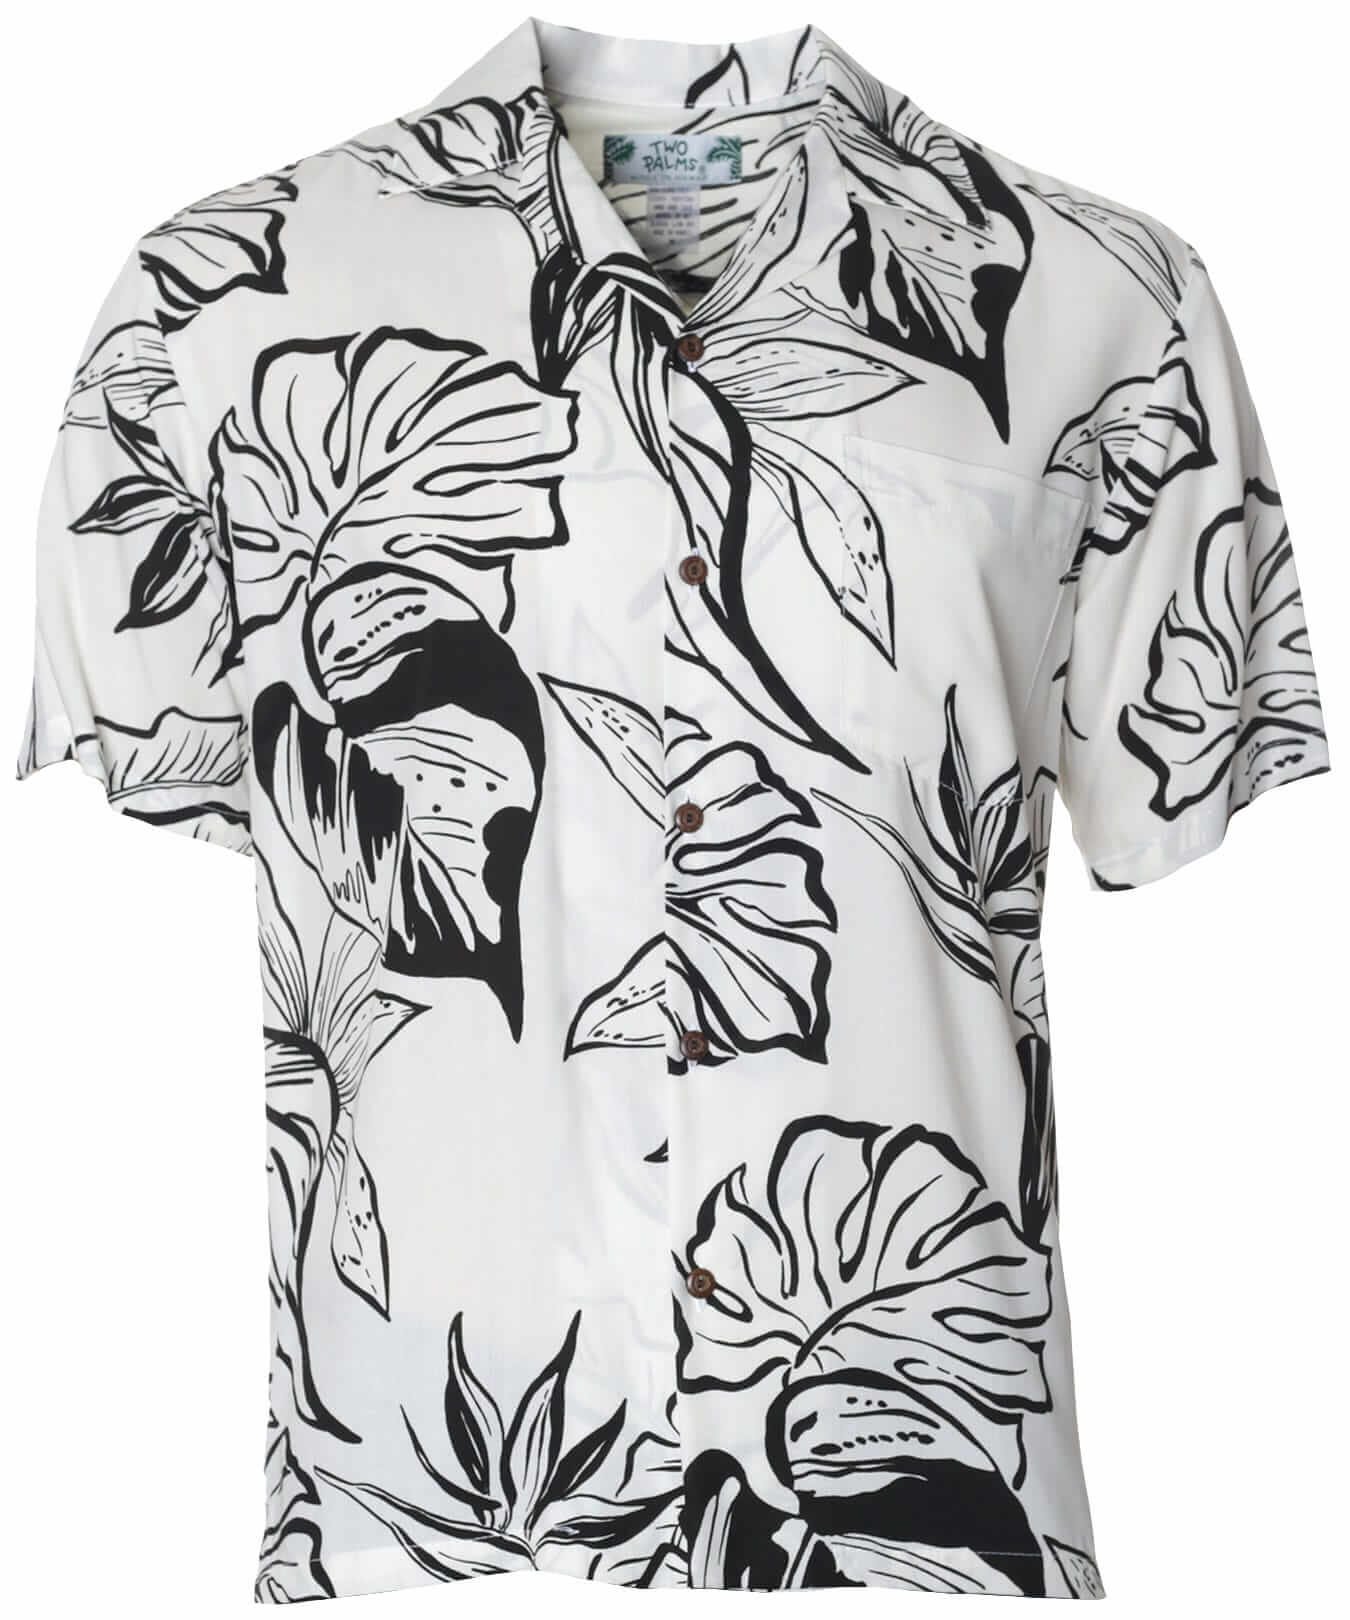 Rayon Fern Grotto Men's Aloha Shirt White